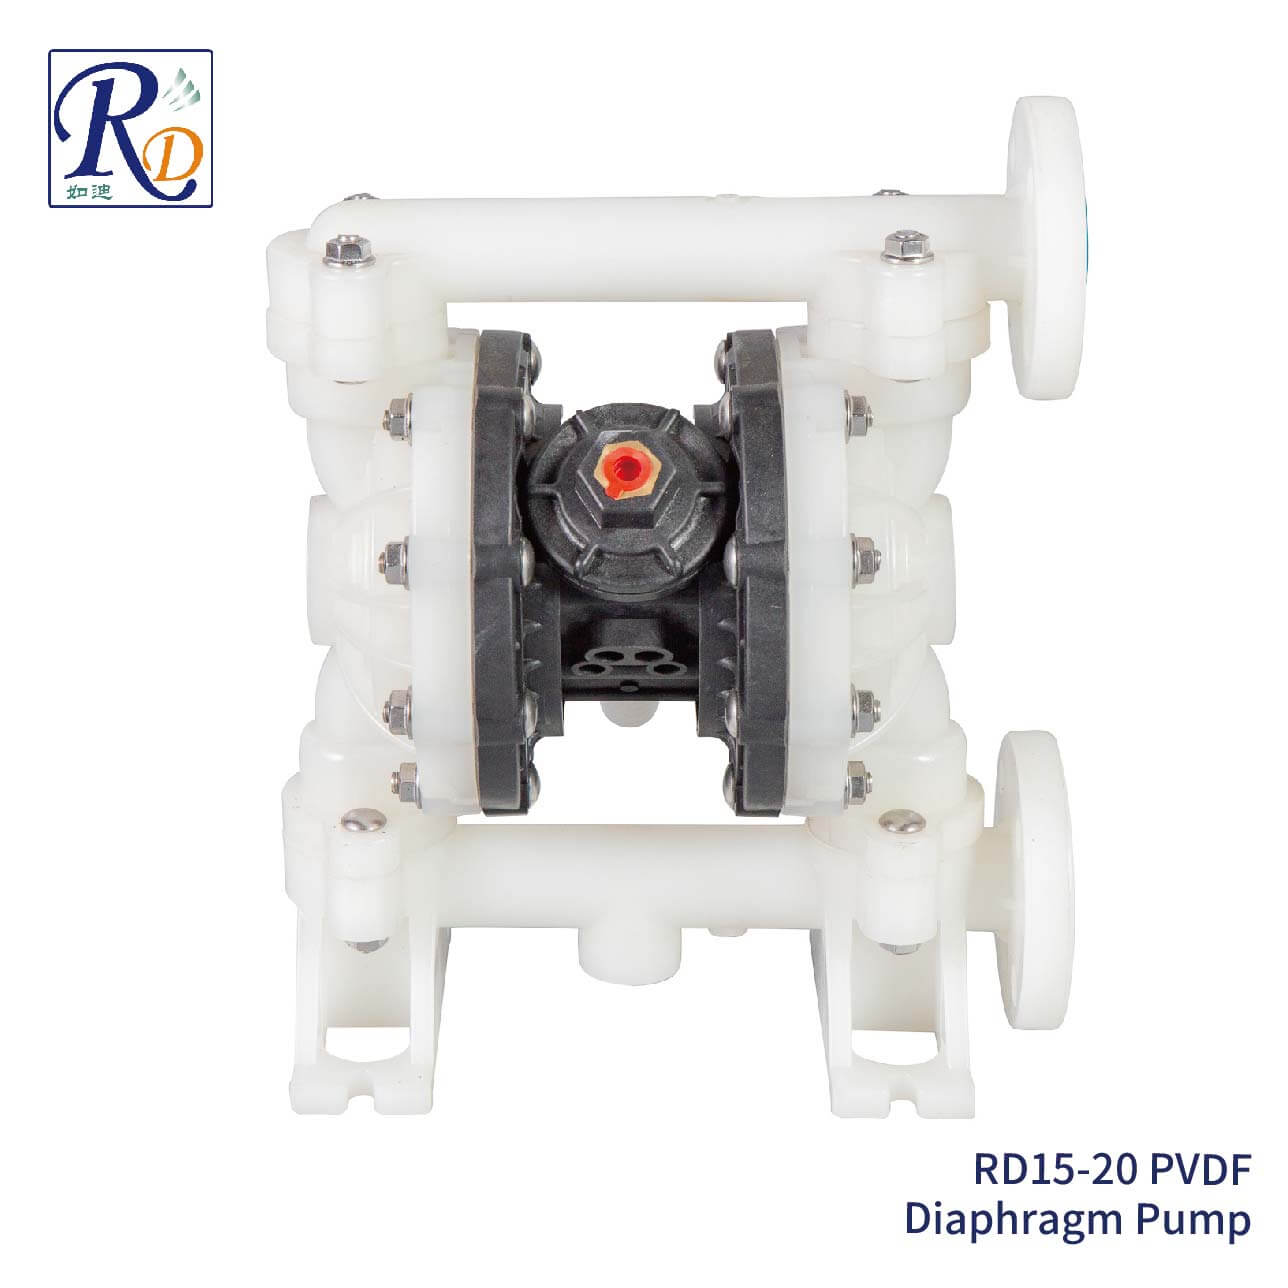 RD15-20 PVDF Diaphragm Pump